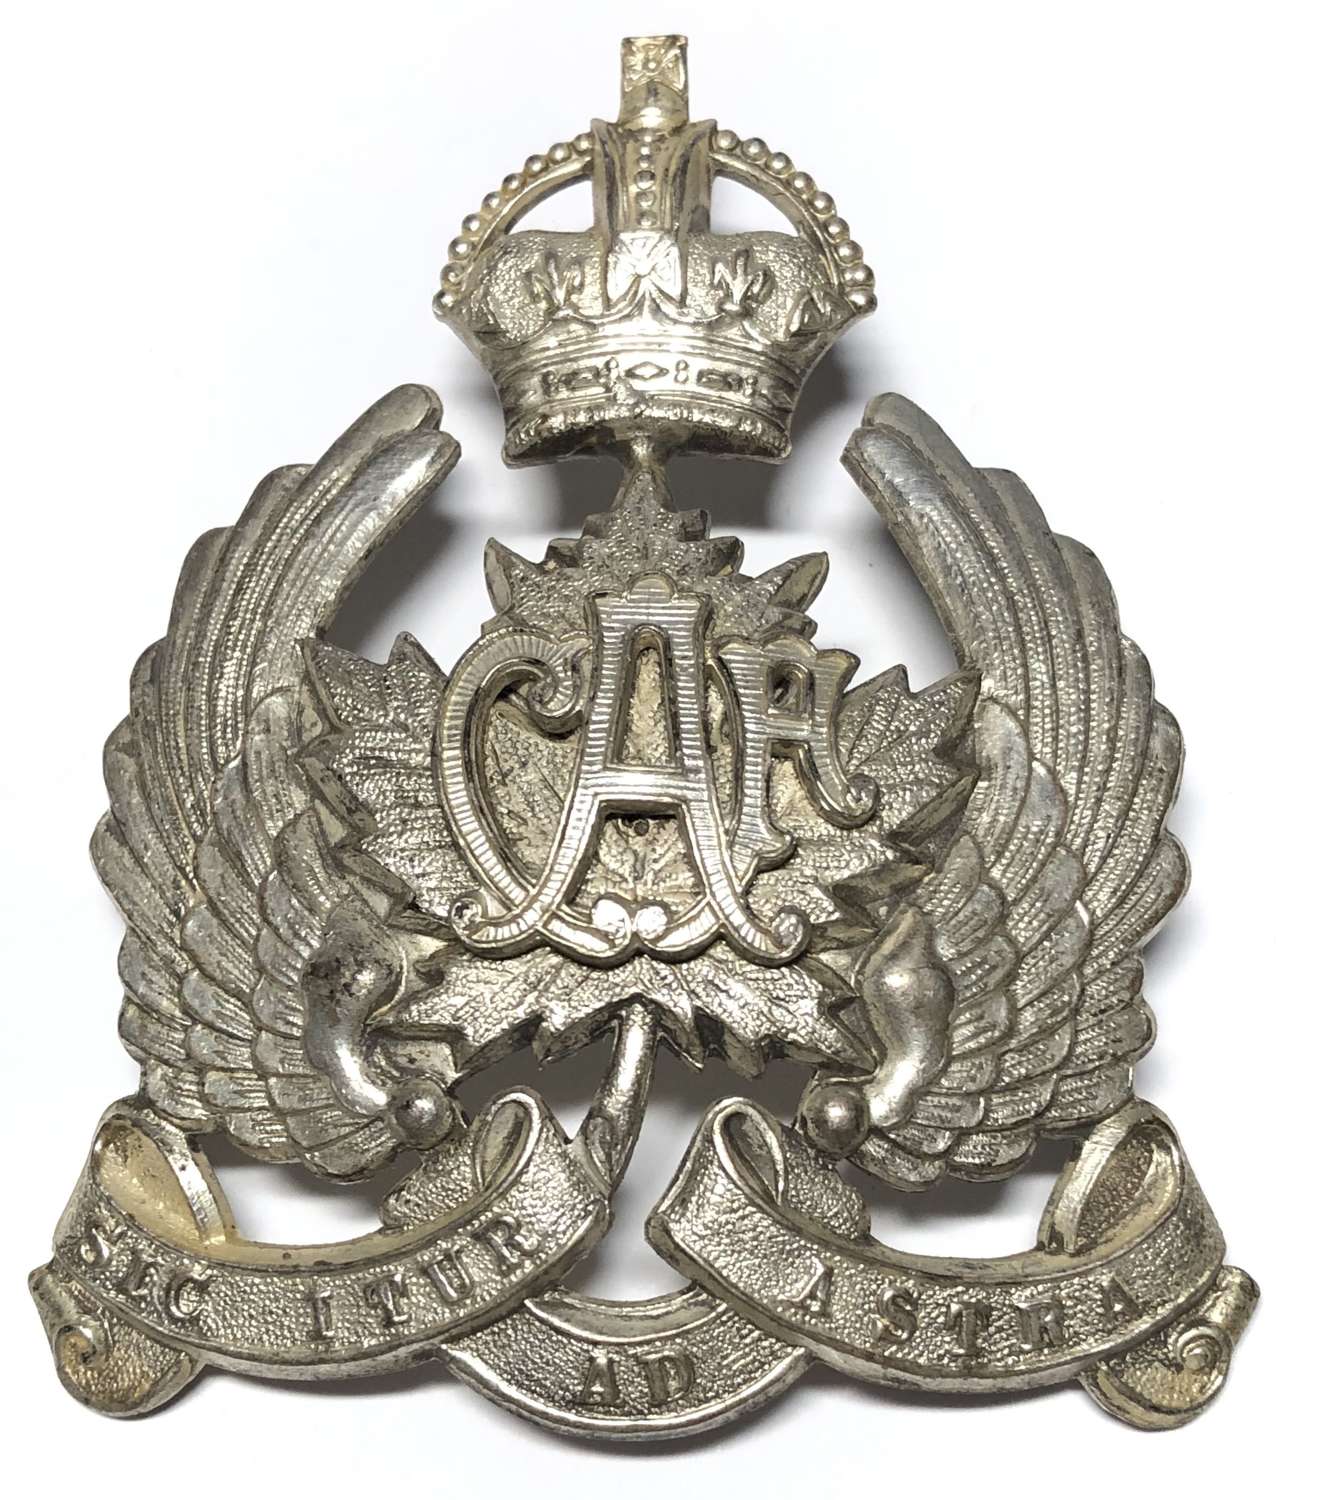 Canadian Air Force large cap badge circa 1920-24